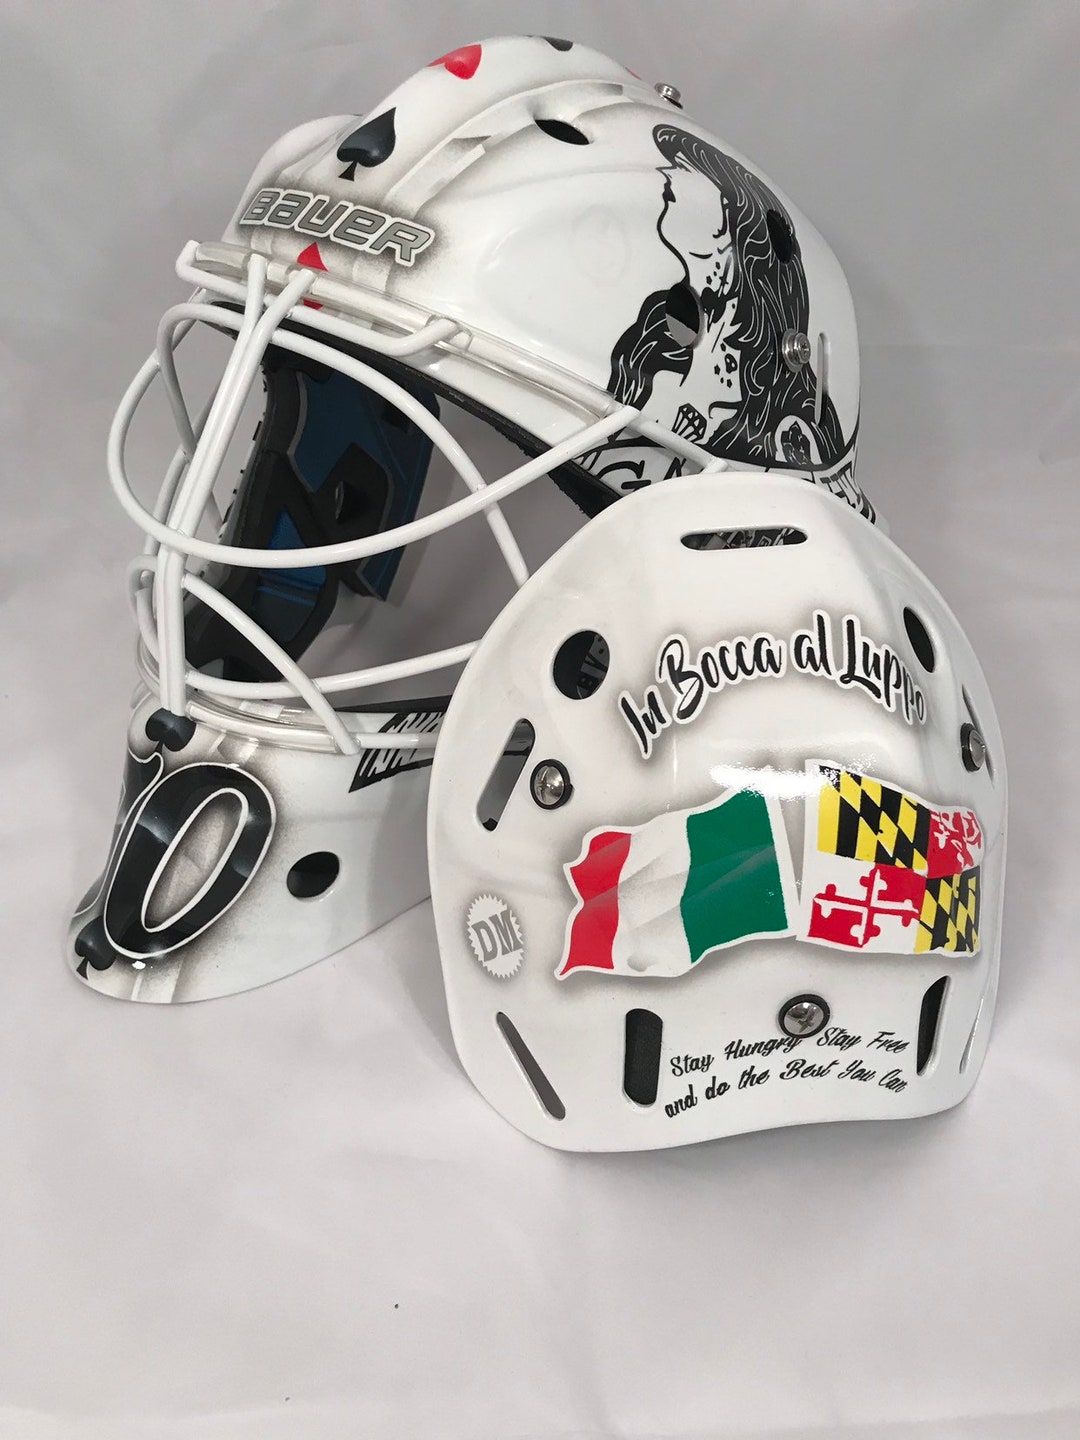 China White Cat Eyes Hockey Goalie Helmet Suppliers, Manufacturers